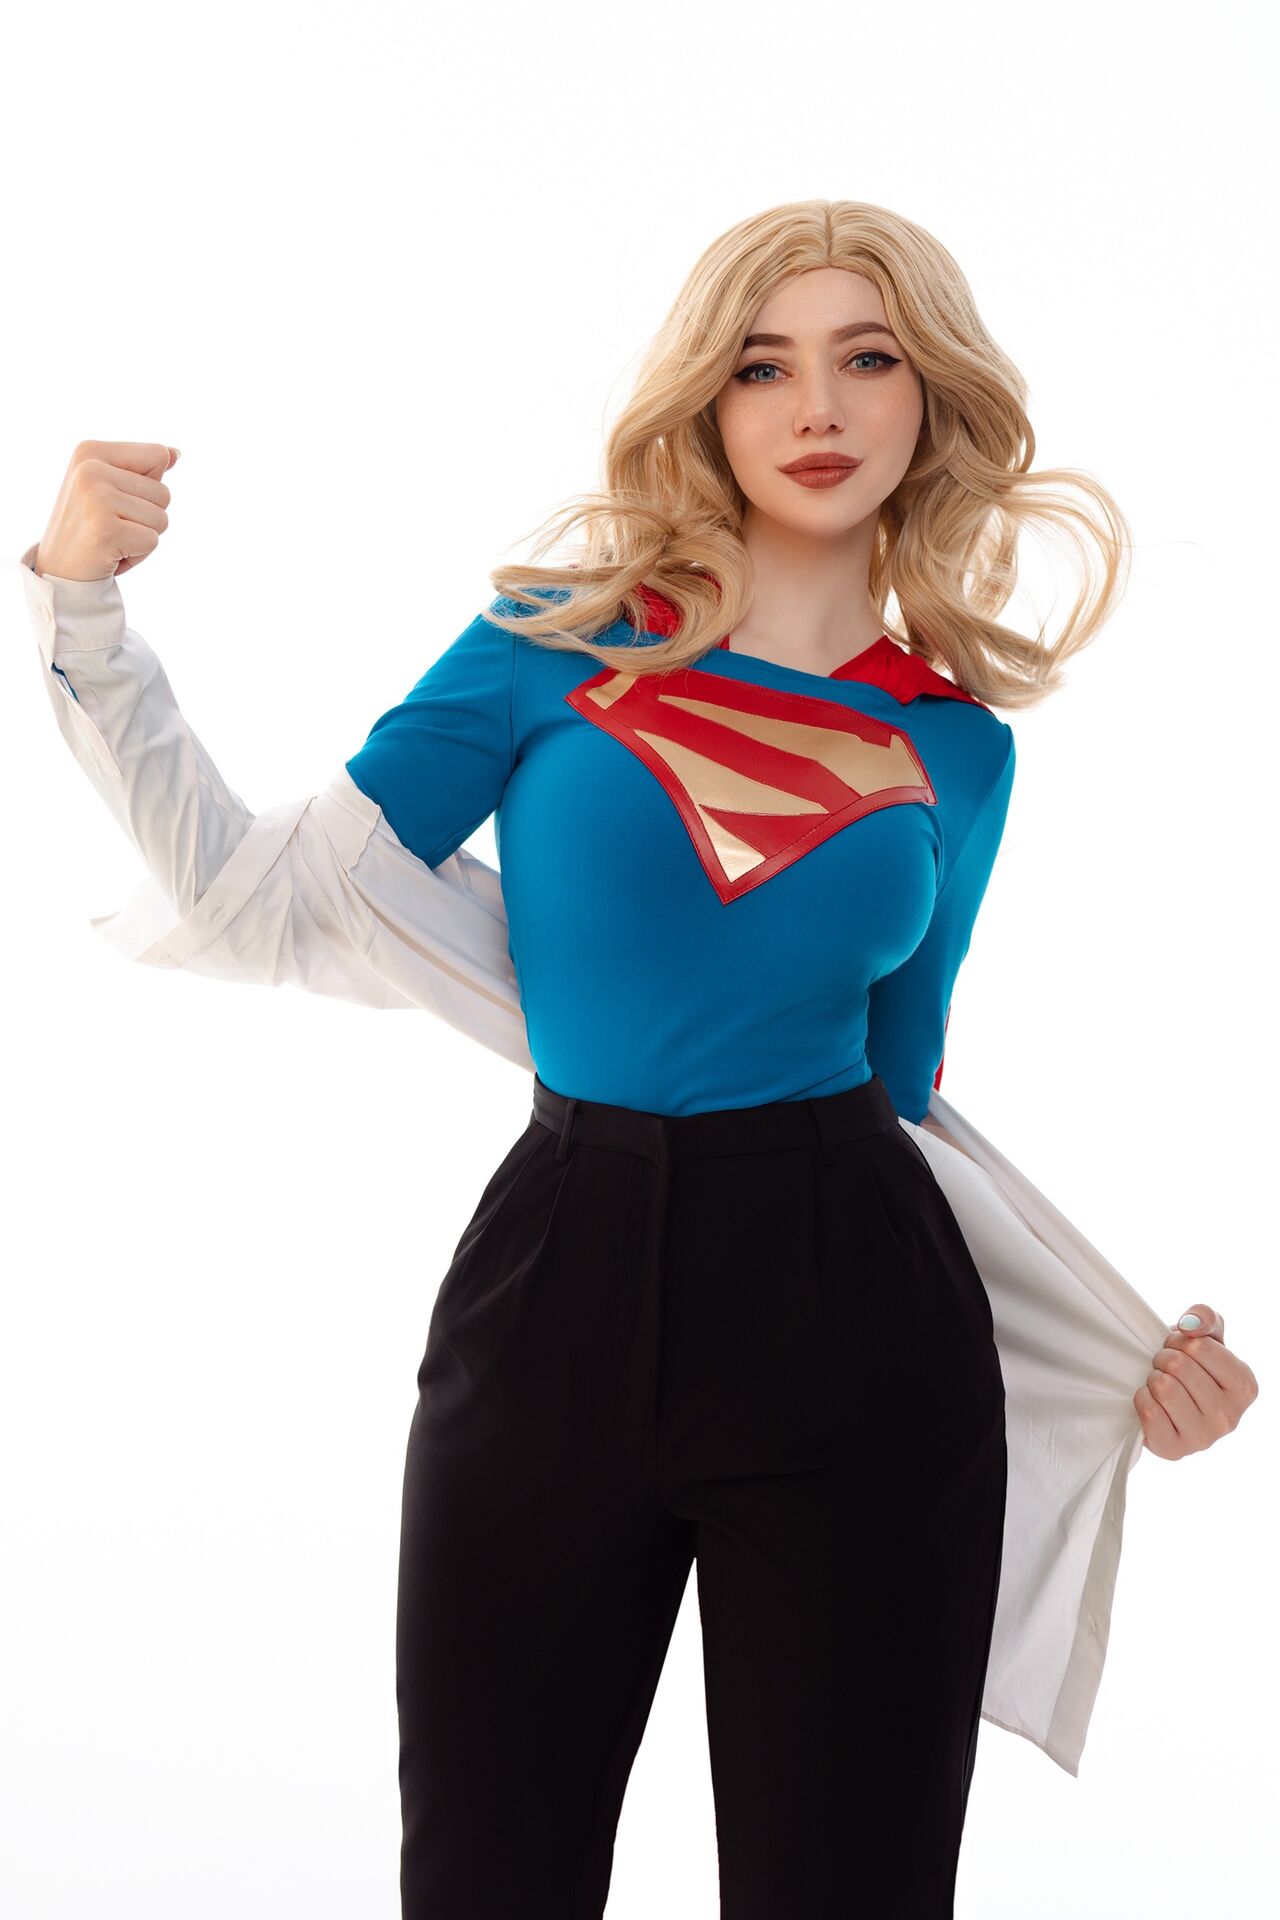 Alina Becker – Supergirl